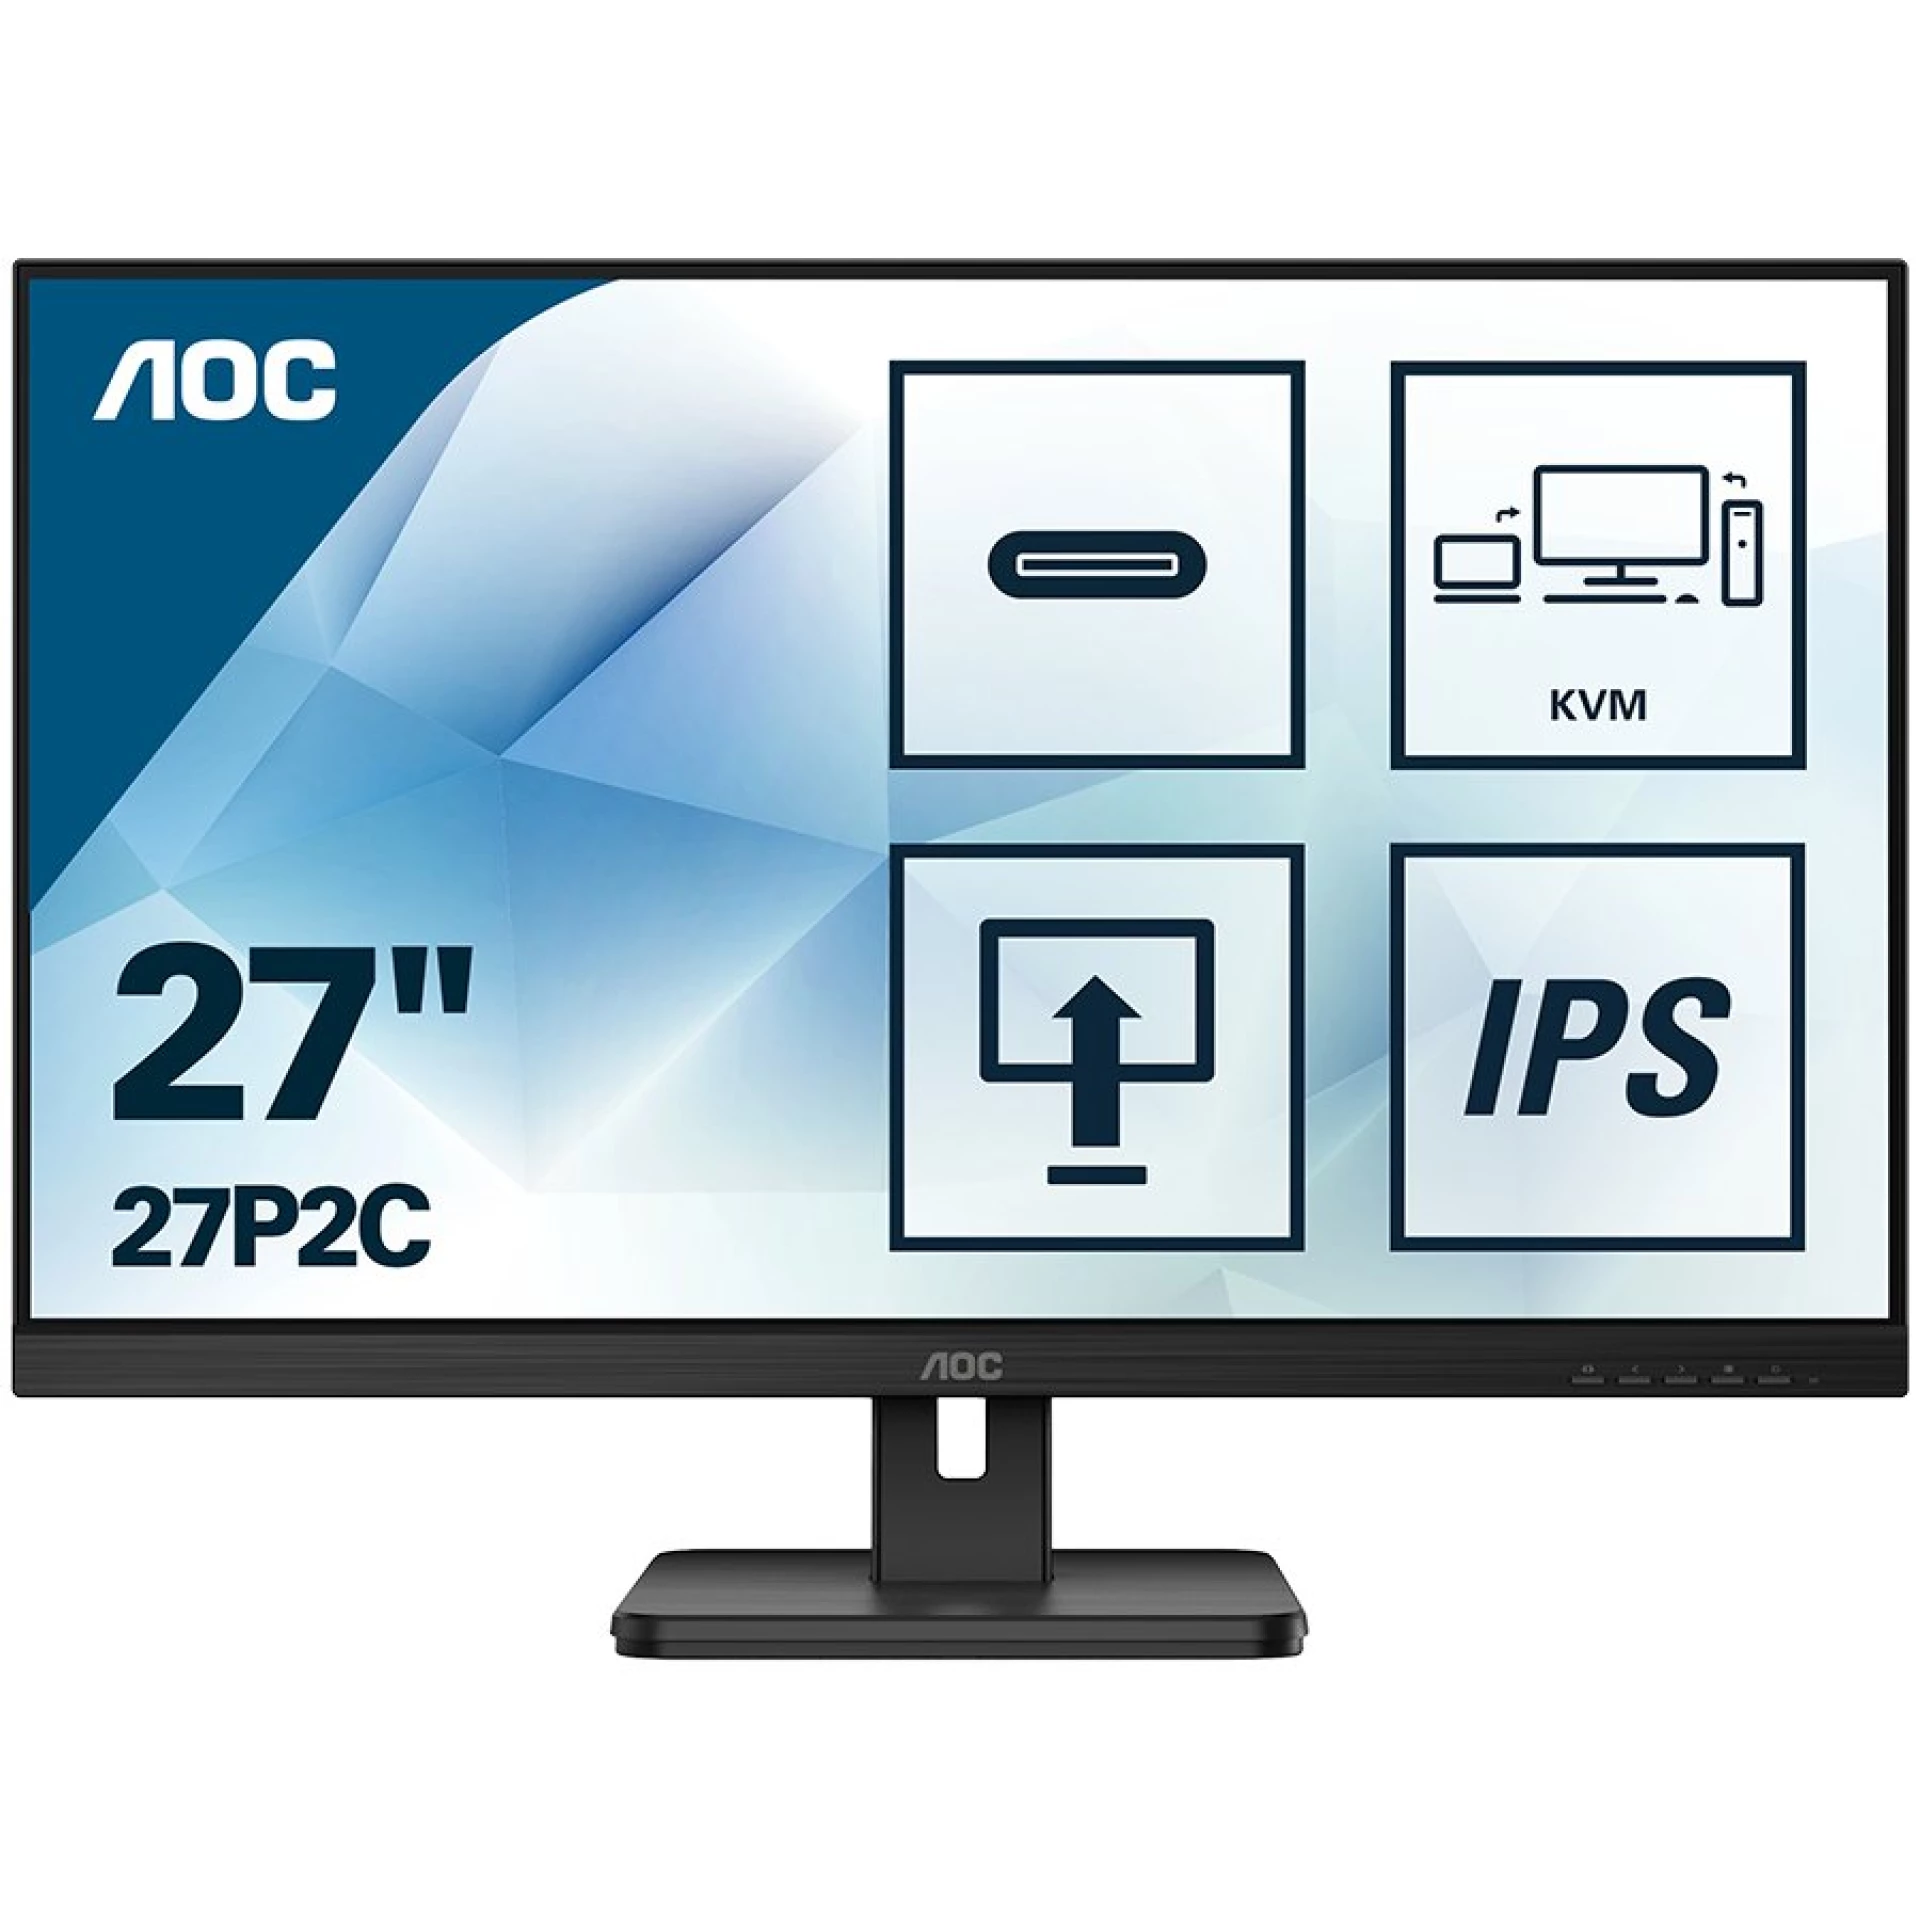 AOC P2 27P2C LED display